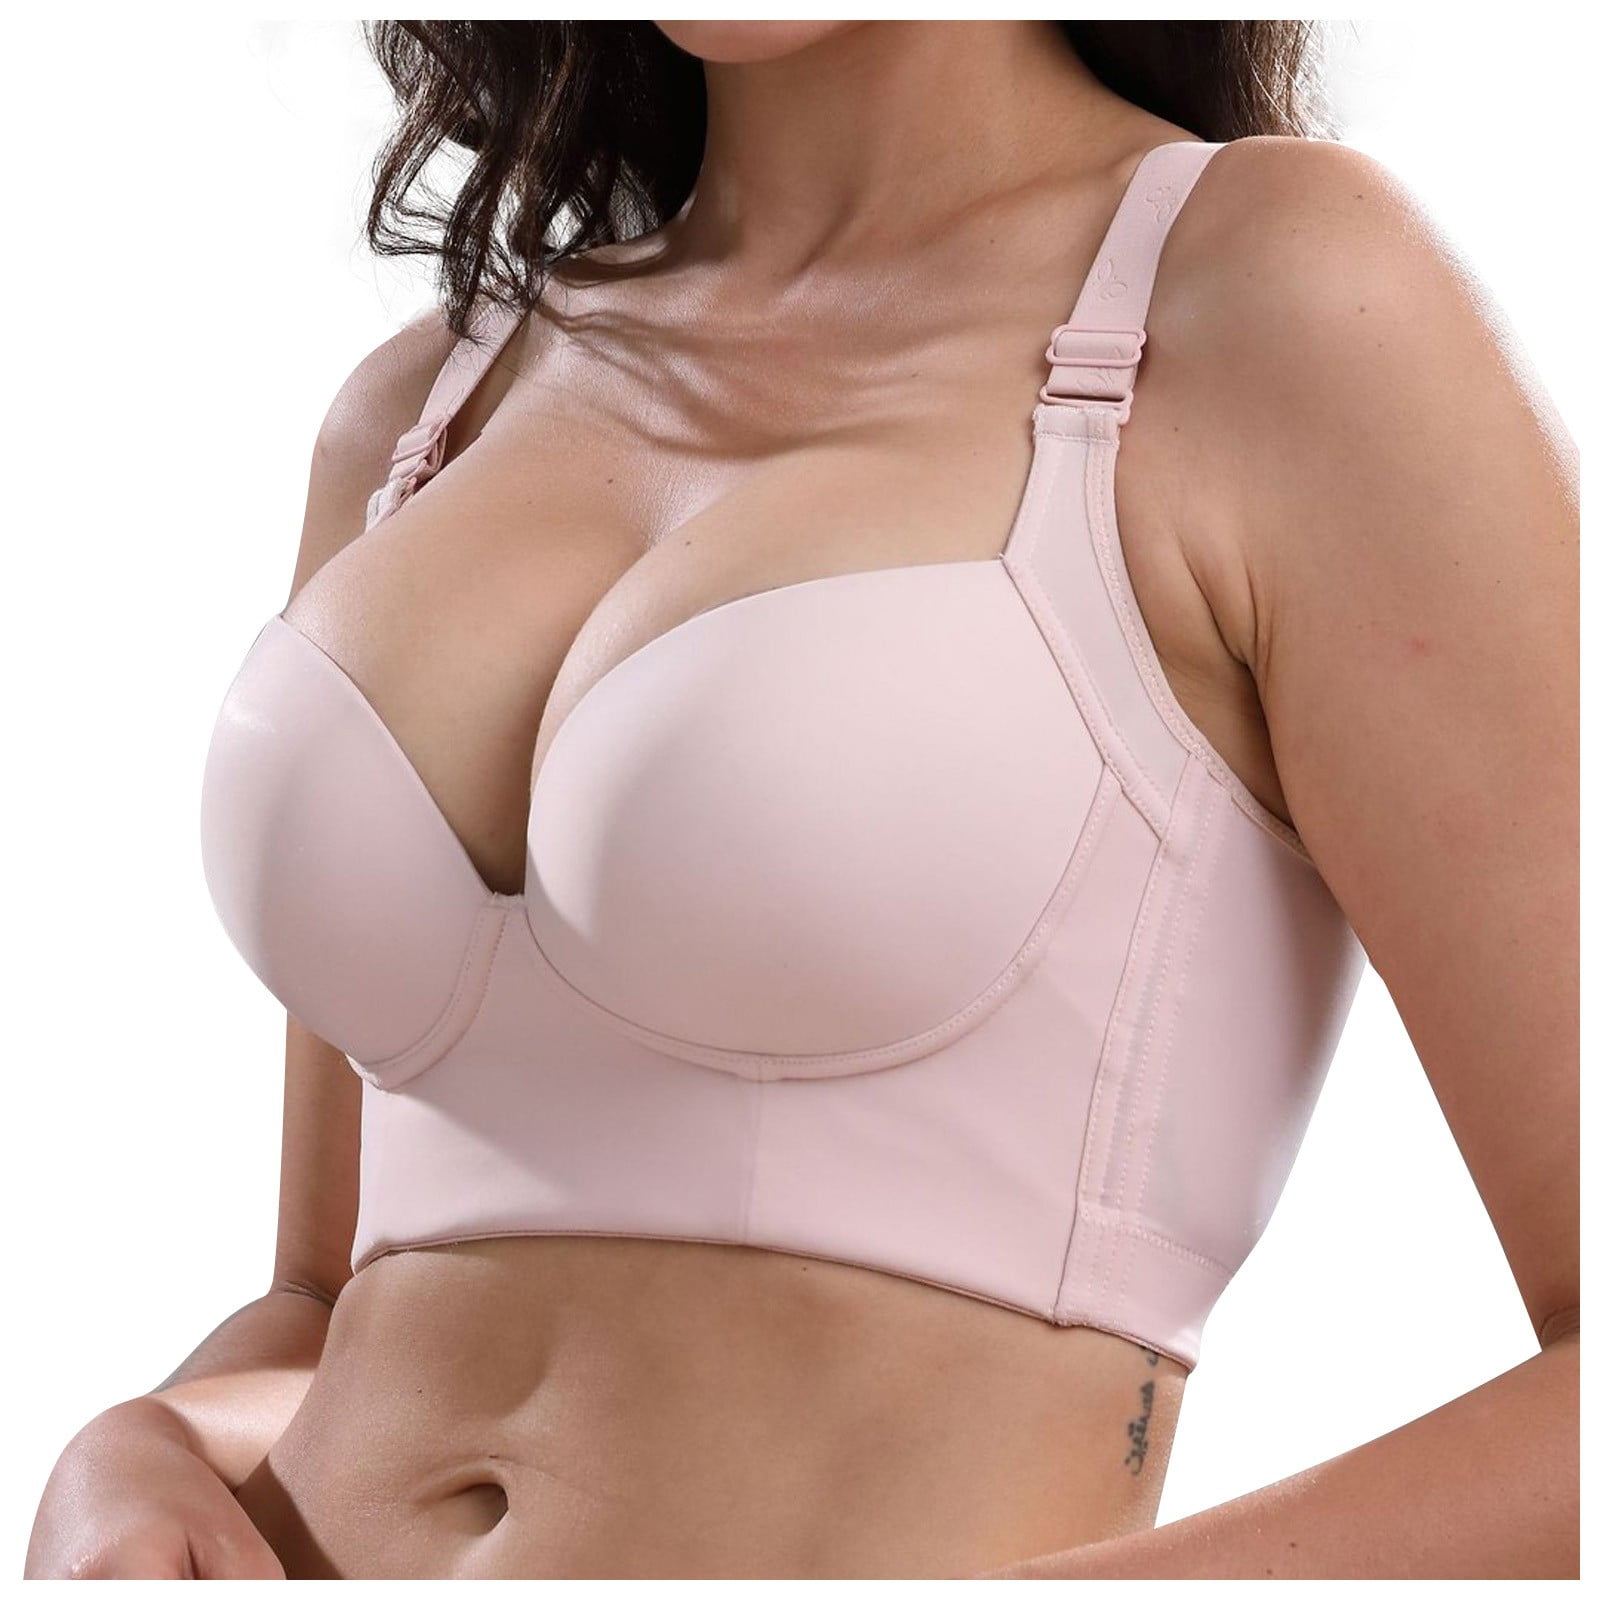 TQWQT Women Push Up Bra Plus Size No Underwire Soft Padding Lift Up T-Shirt  Bra Pink 46F 